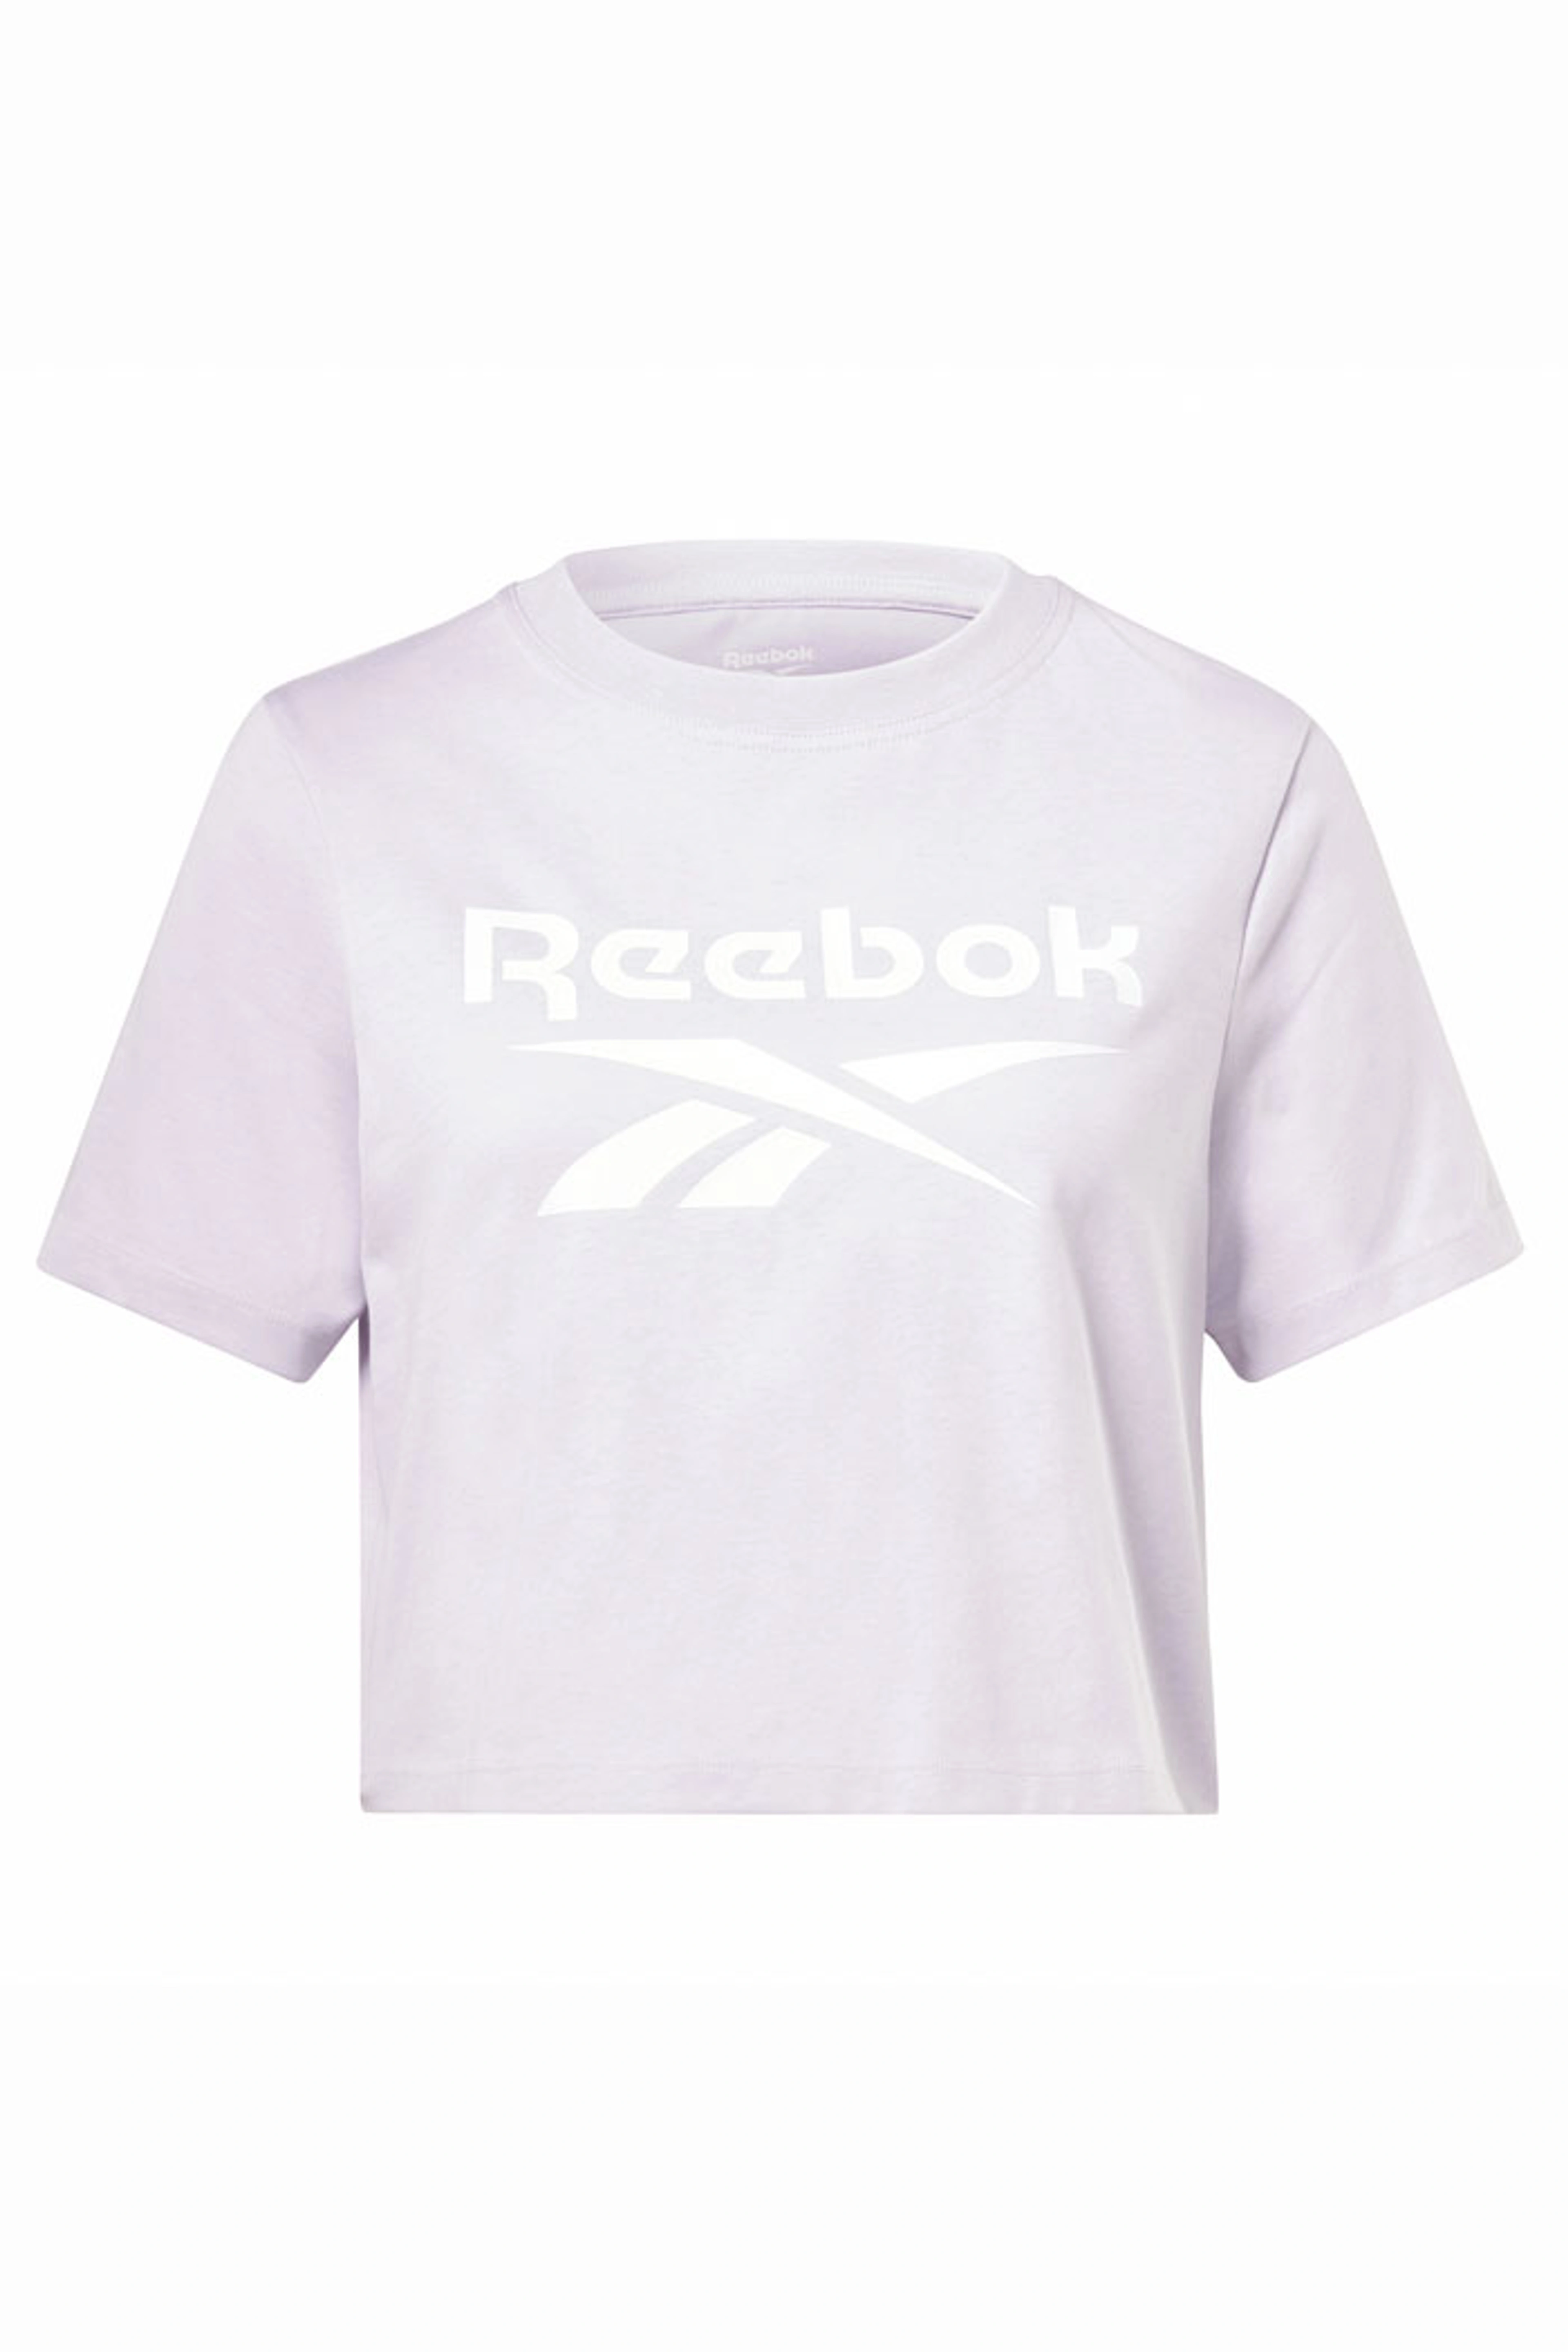 Reebok Identity T-Shirt